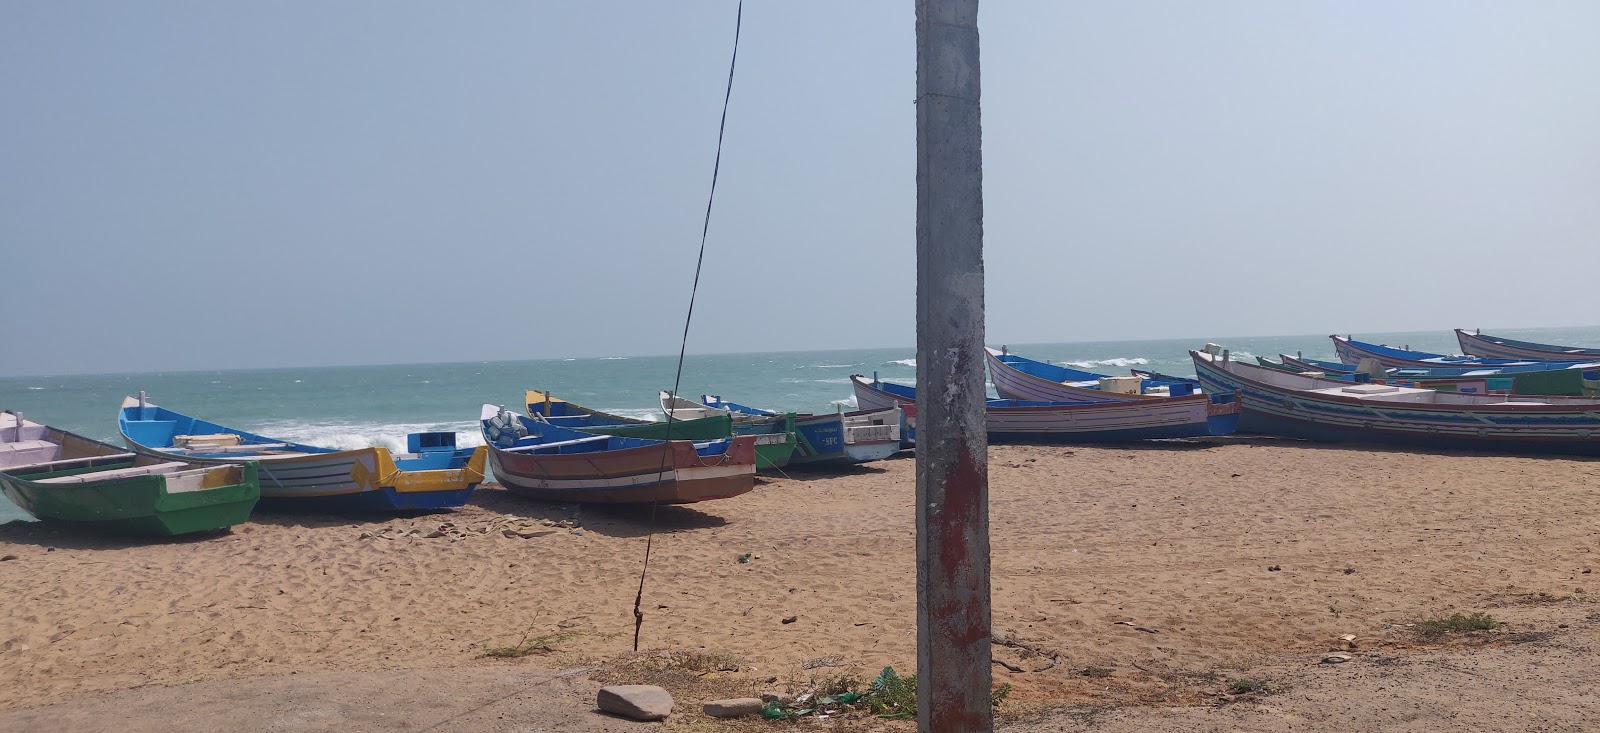 Foto de Thomaiyarpuram Beach con playa amplia